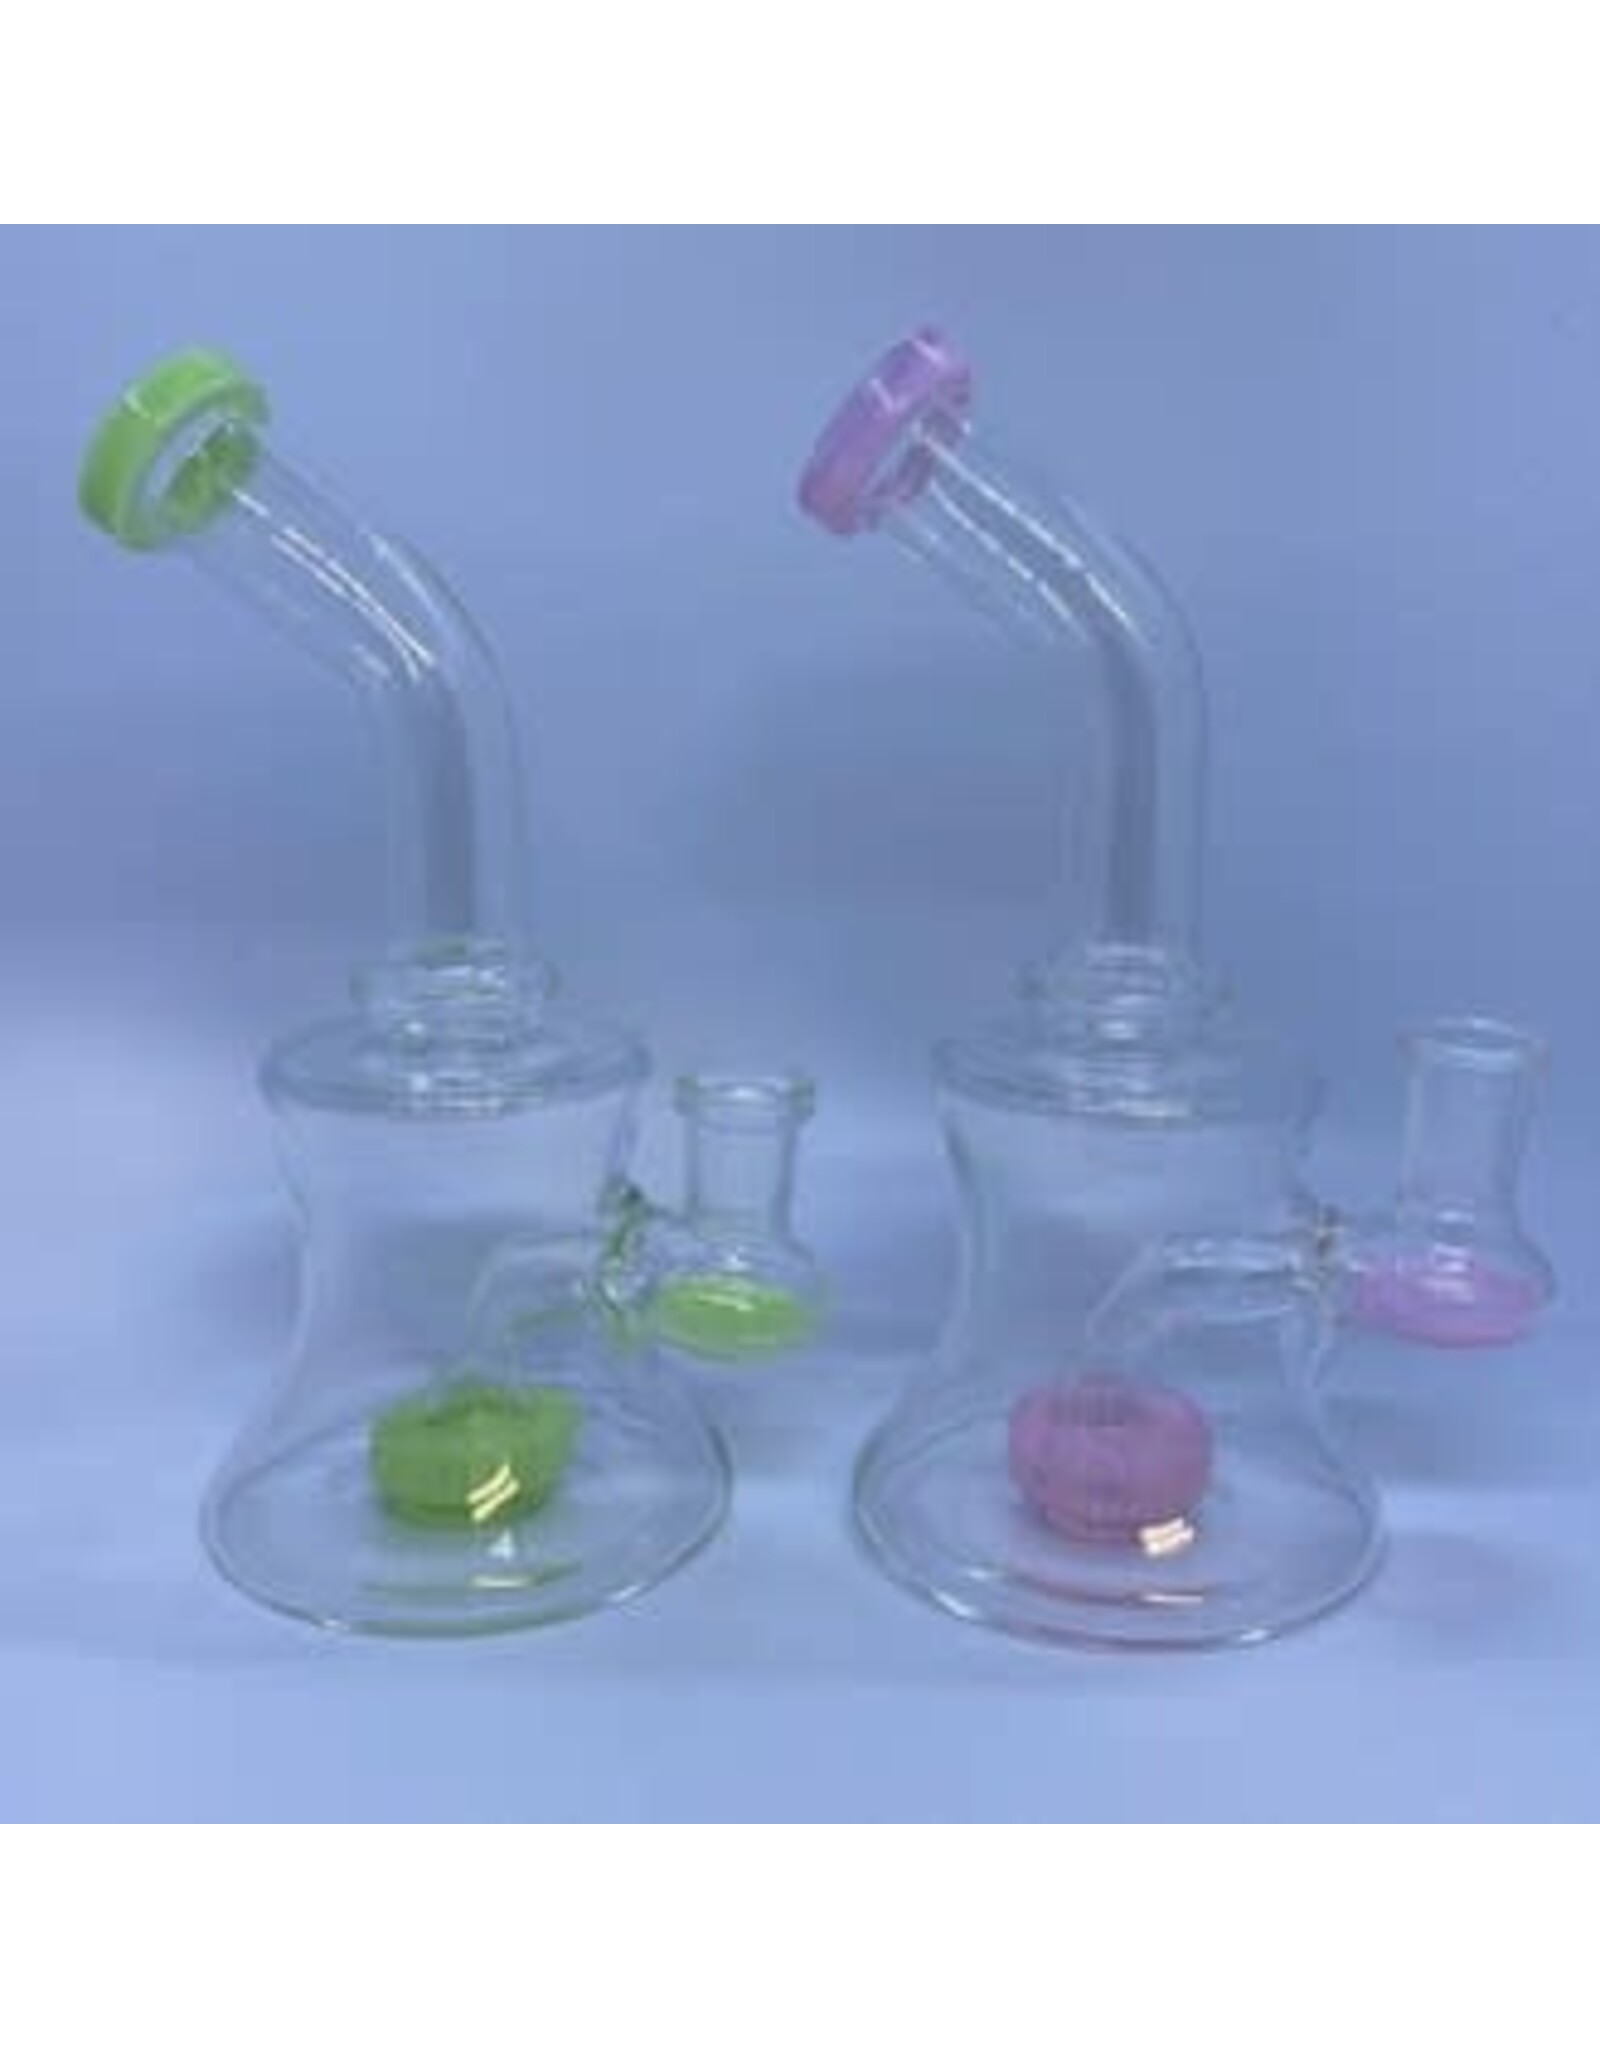 Smokerz Glass SMKZ               7" Premium Neon Color Rim Wheel Perc Water Pipe      WP75